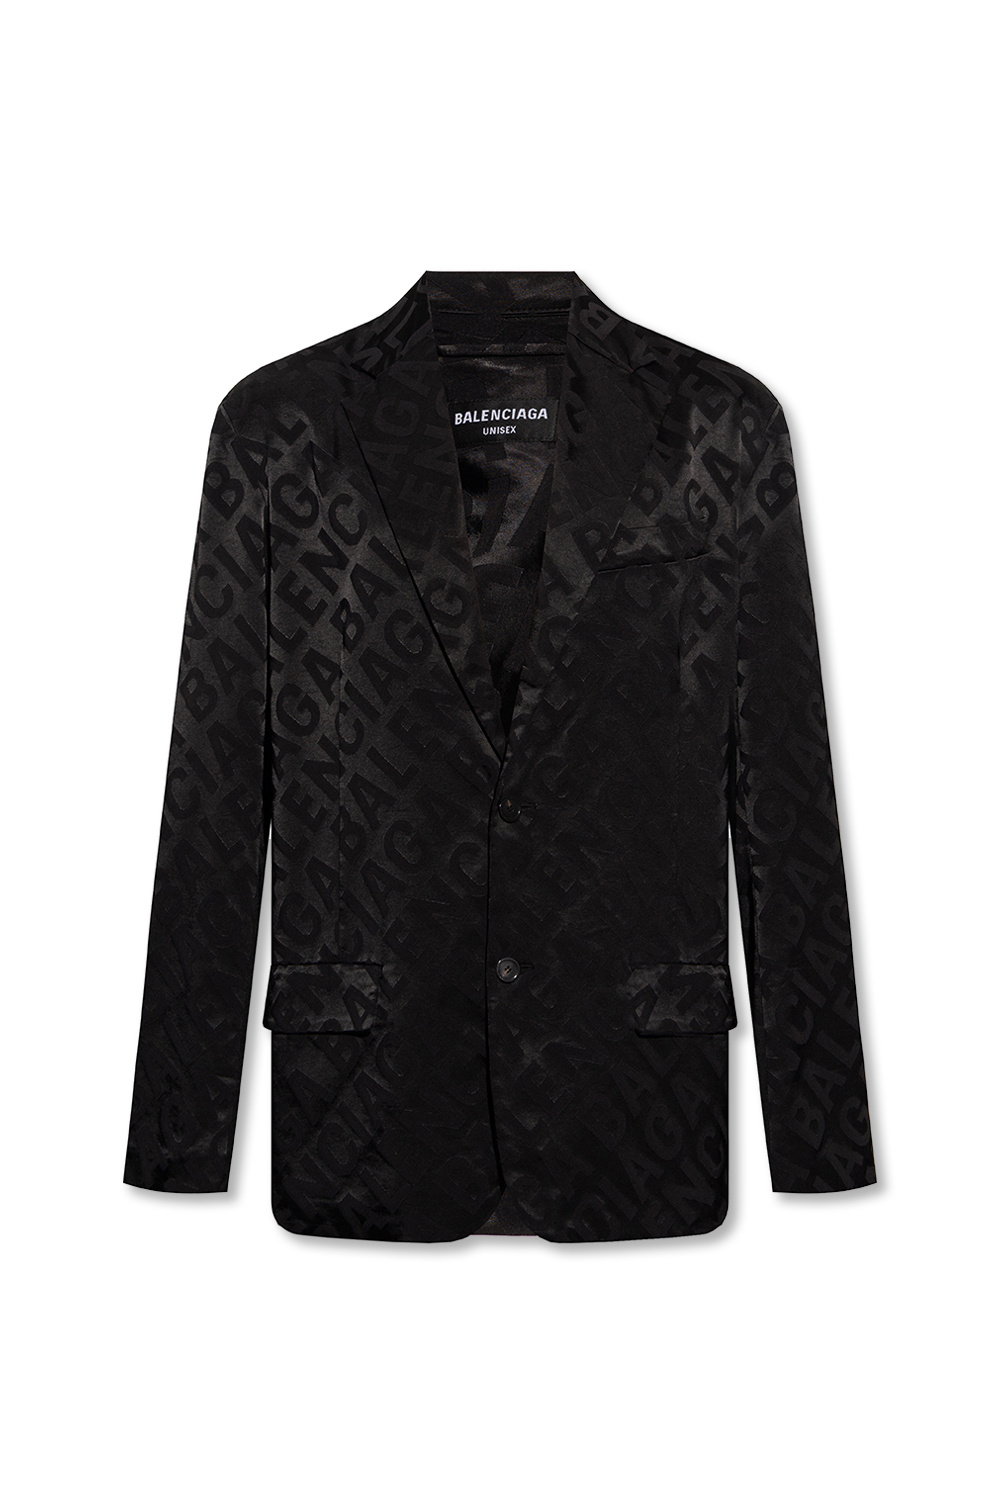 Tom Ford button-up cuffed Knitwear jacket - Black Blazer with logo